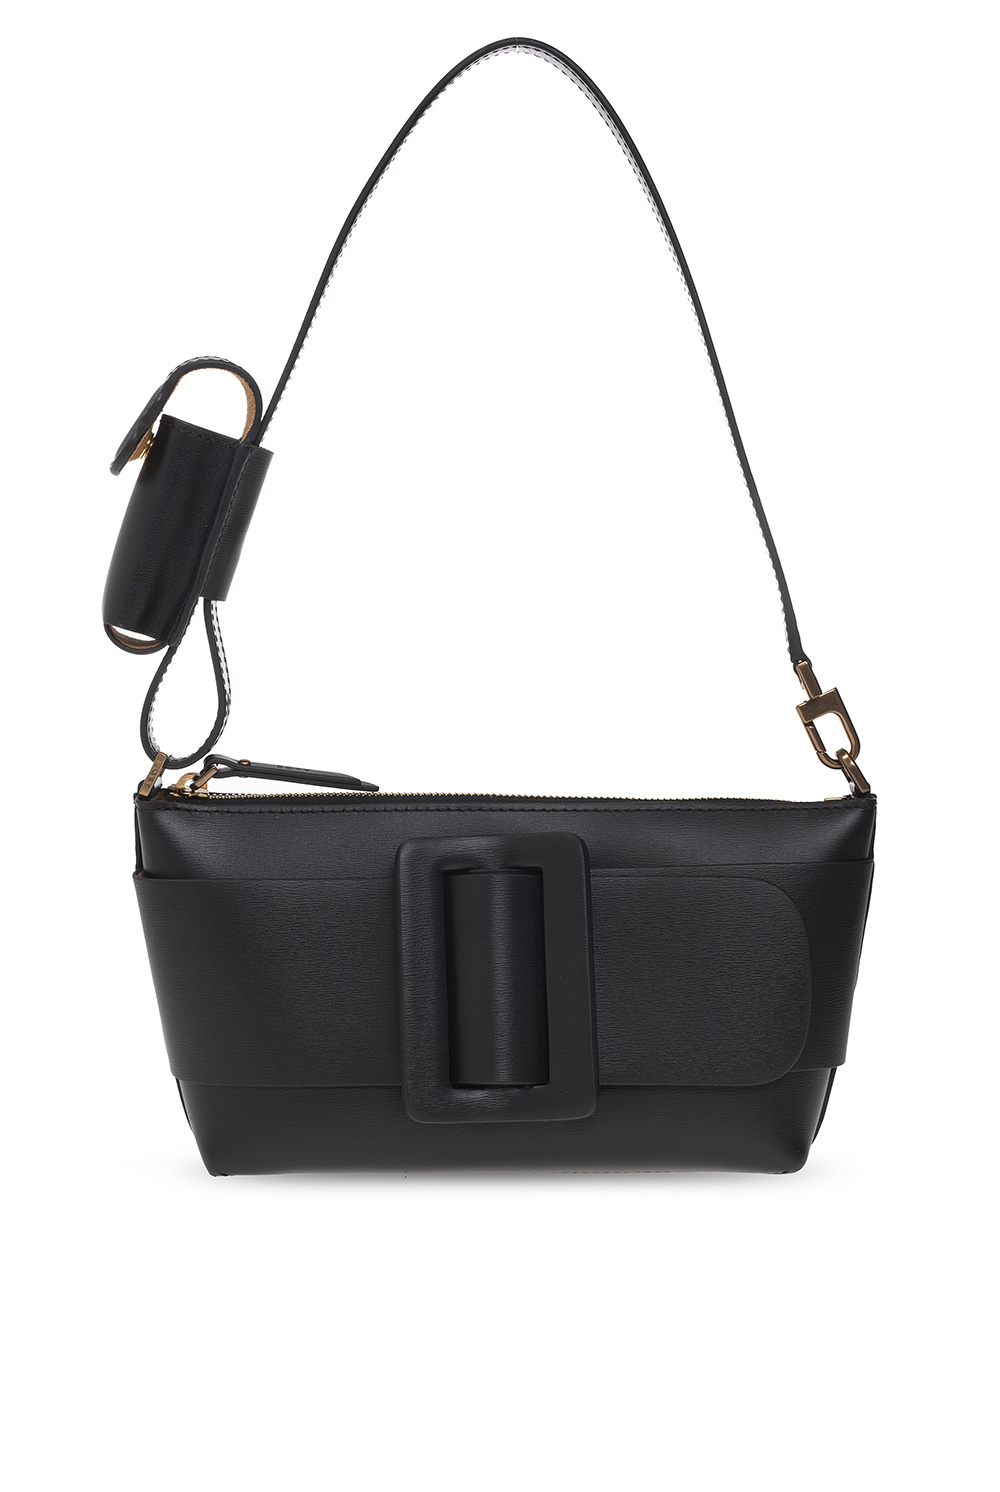 BOYY 'Buckle Flap Case' phone pouch, Women's Accessories